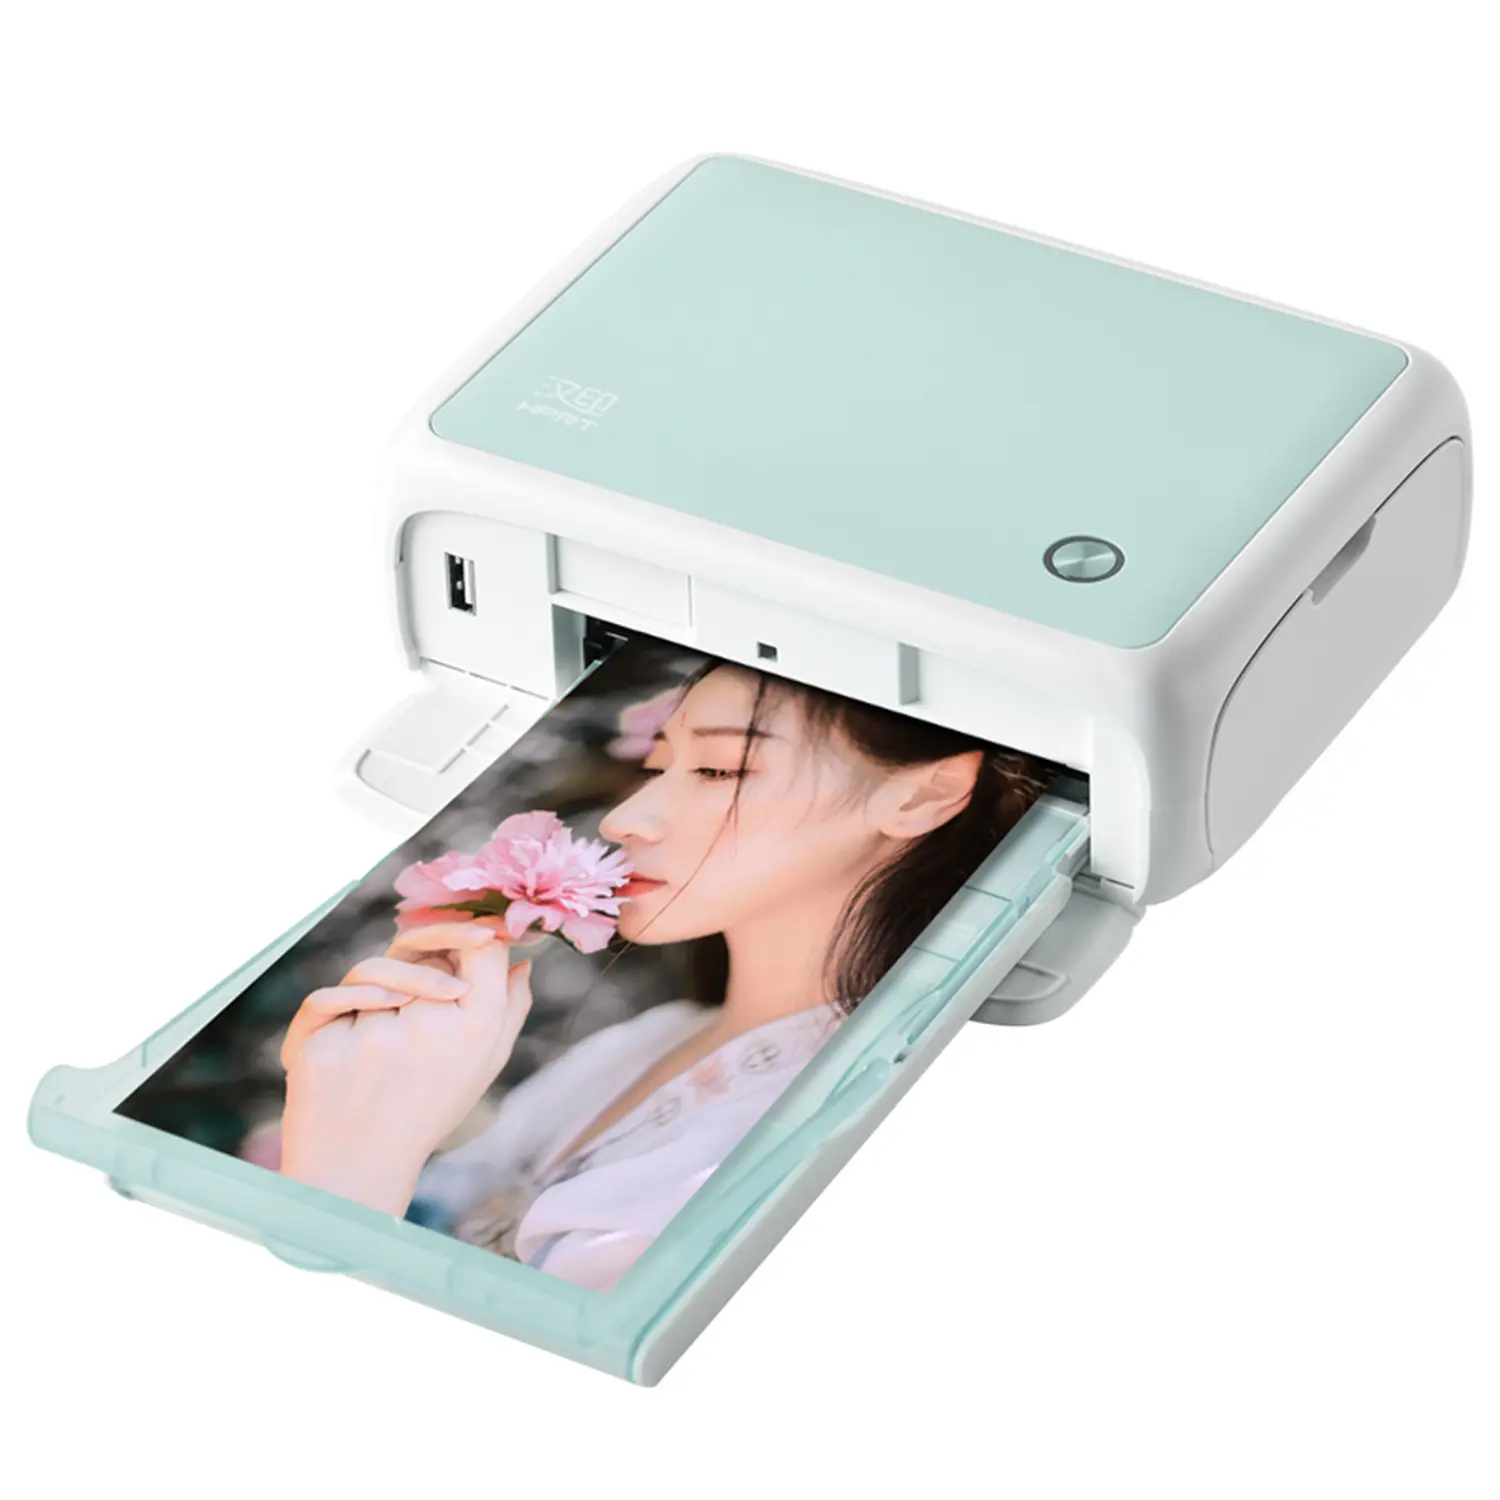 Color Photography Printer Portable 300dpi AR Printing WiFi Automatic Lamination MIni Mobile imprimante Photo Printer